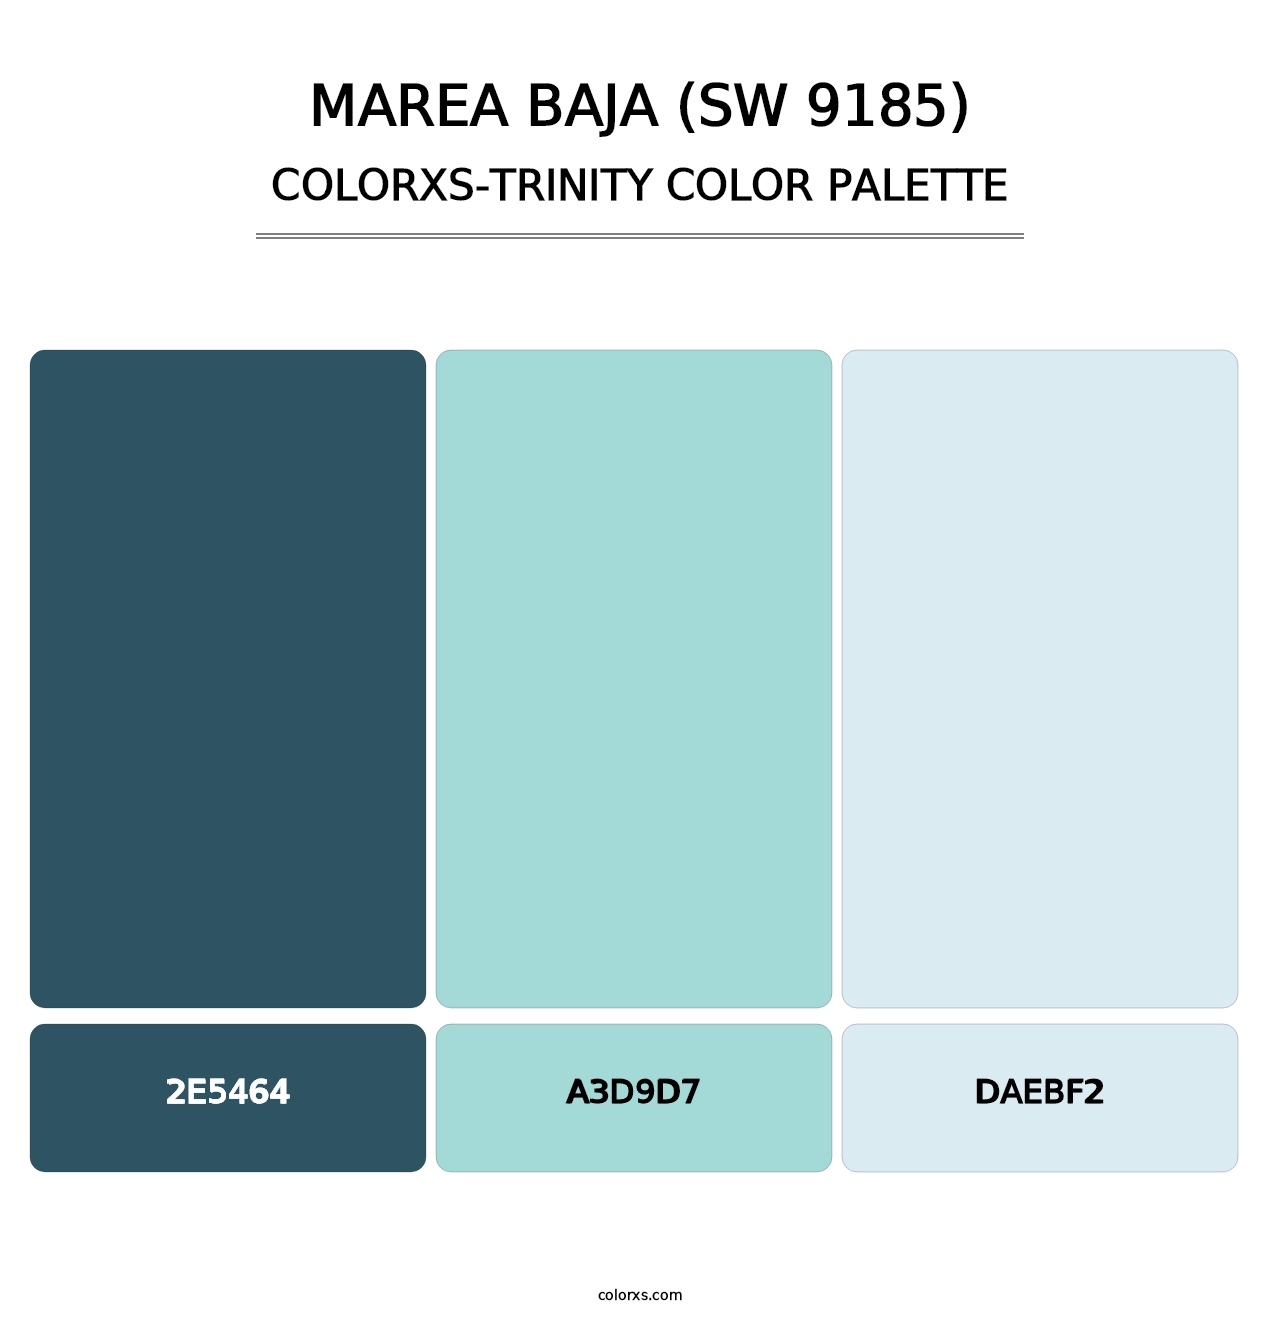 Marea Baja (SW 9185) - Colorxs Trinity Palette